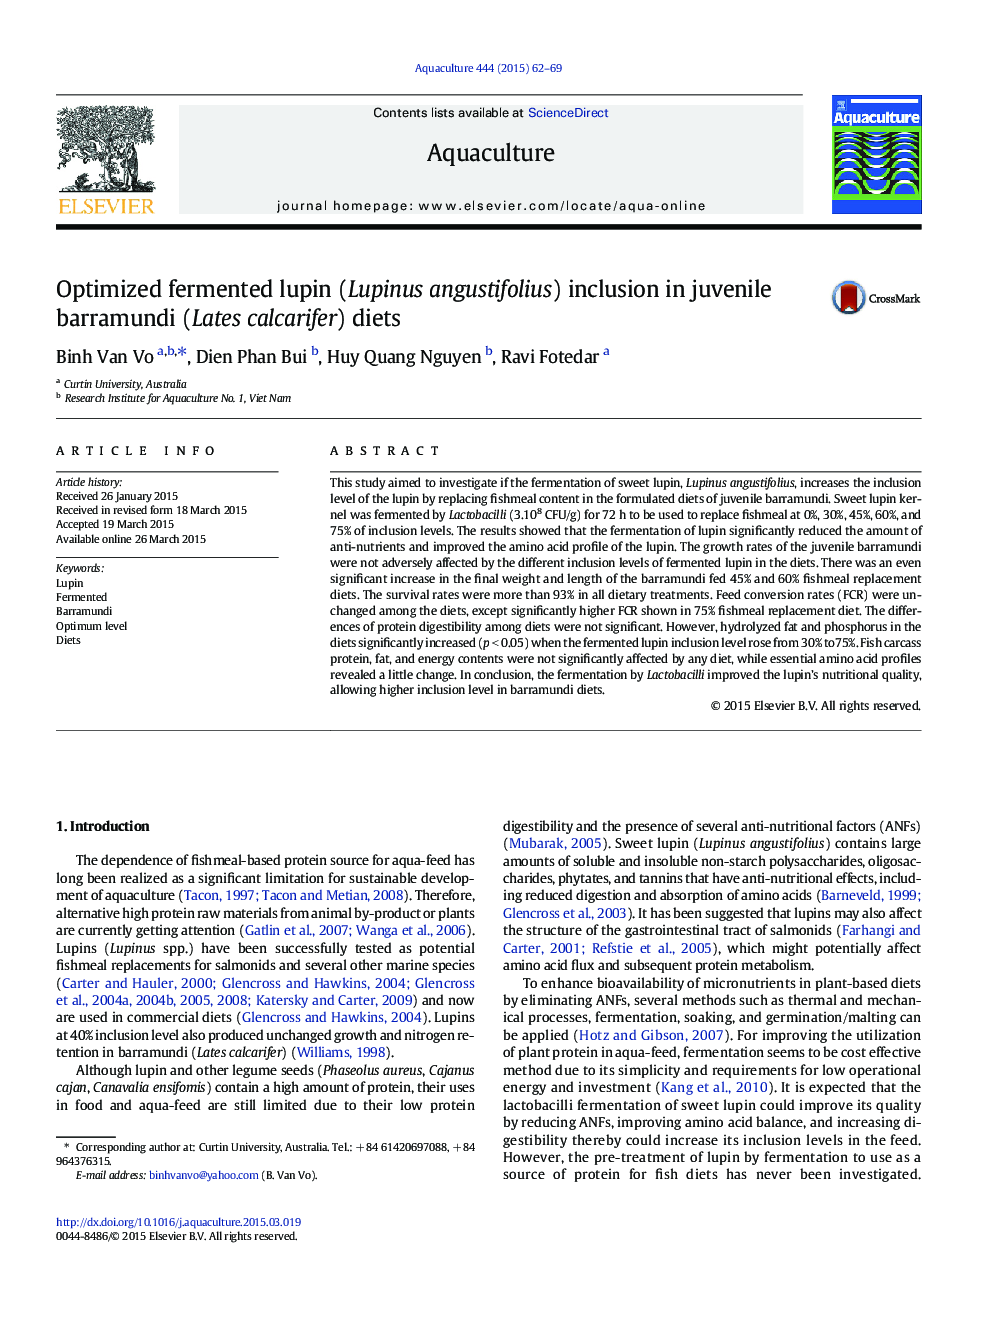 Optimized fermented lupin (Lupinus angustifolius) inclusion in juvenile barramundi (Lates calcarifer) diets